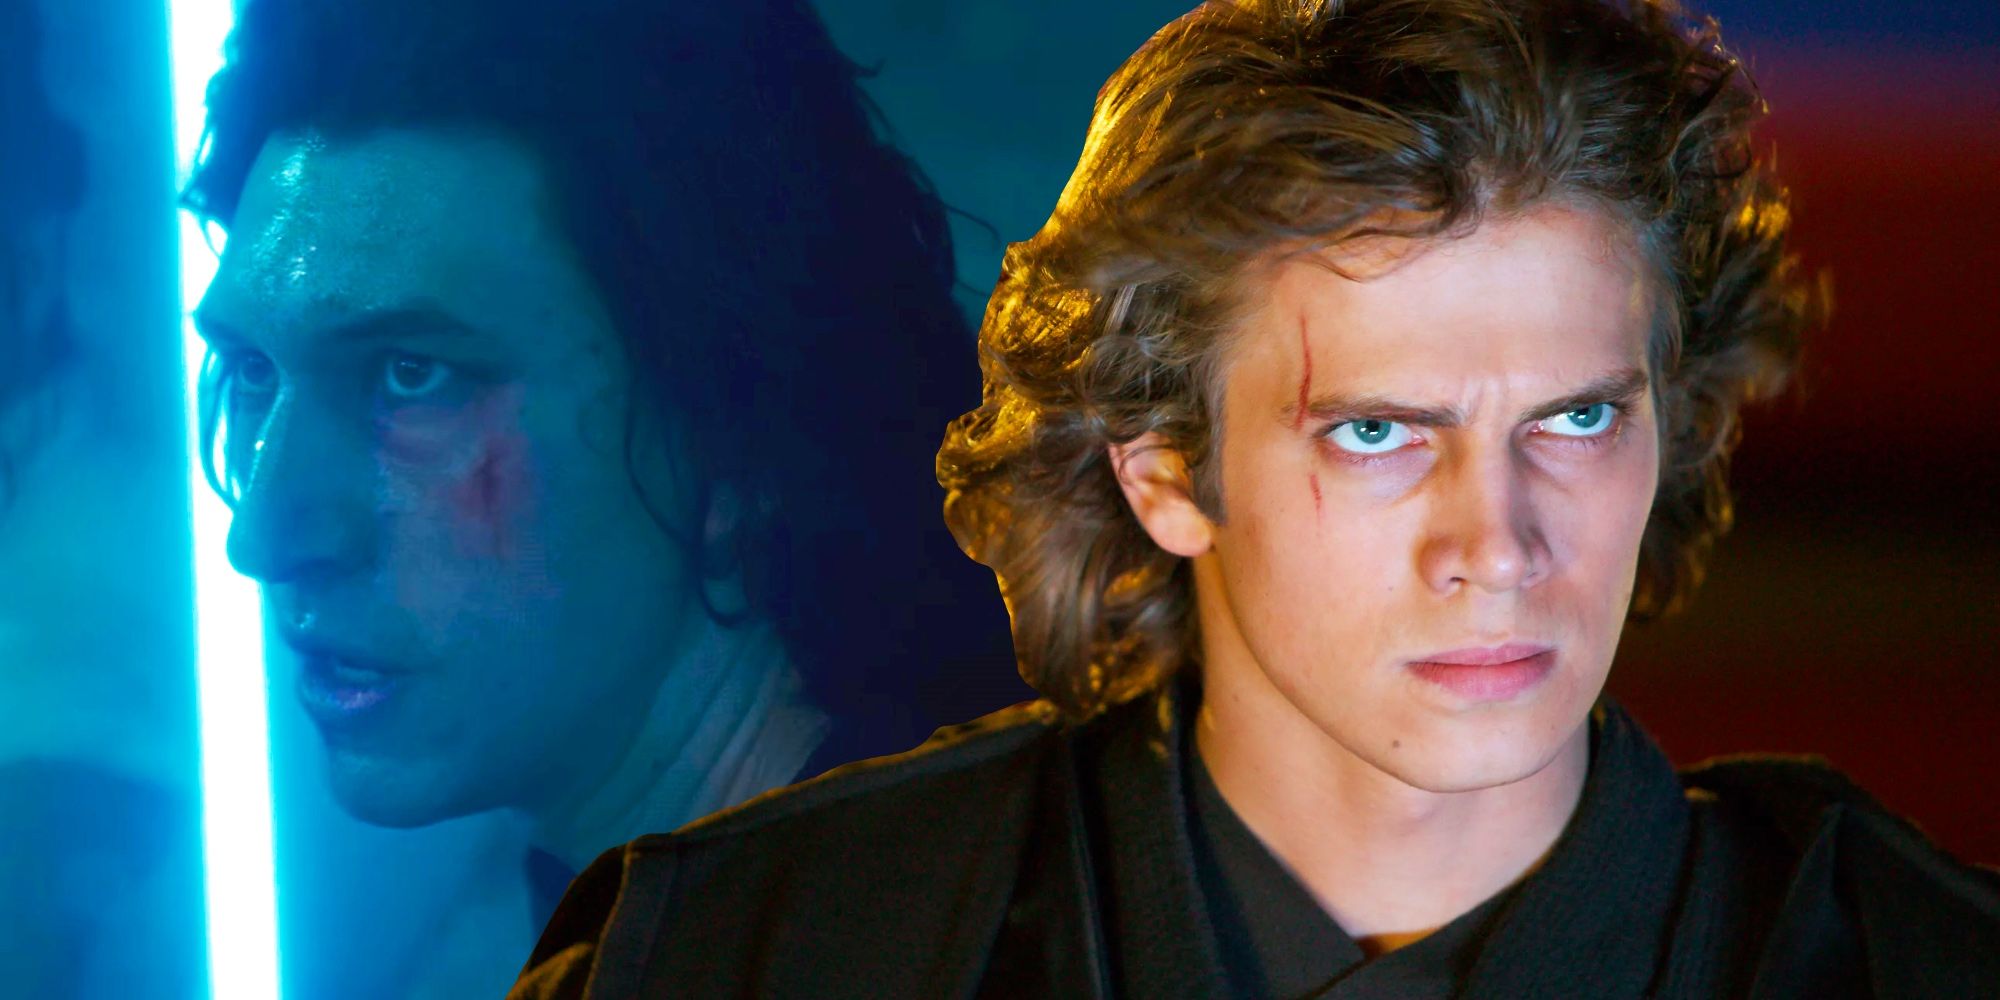 Anakin Skywalker and Ben Solo in Star Wars